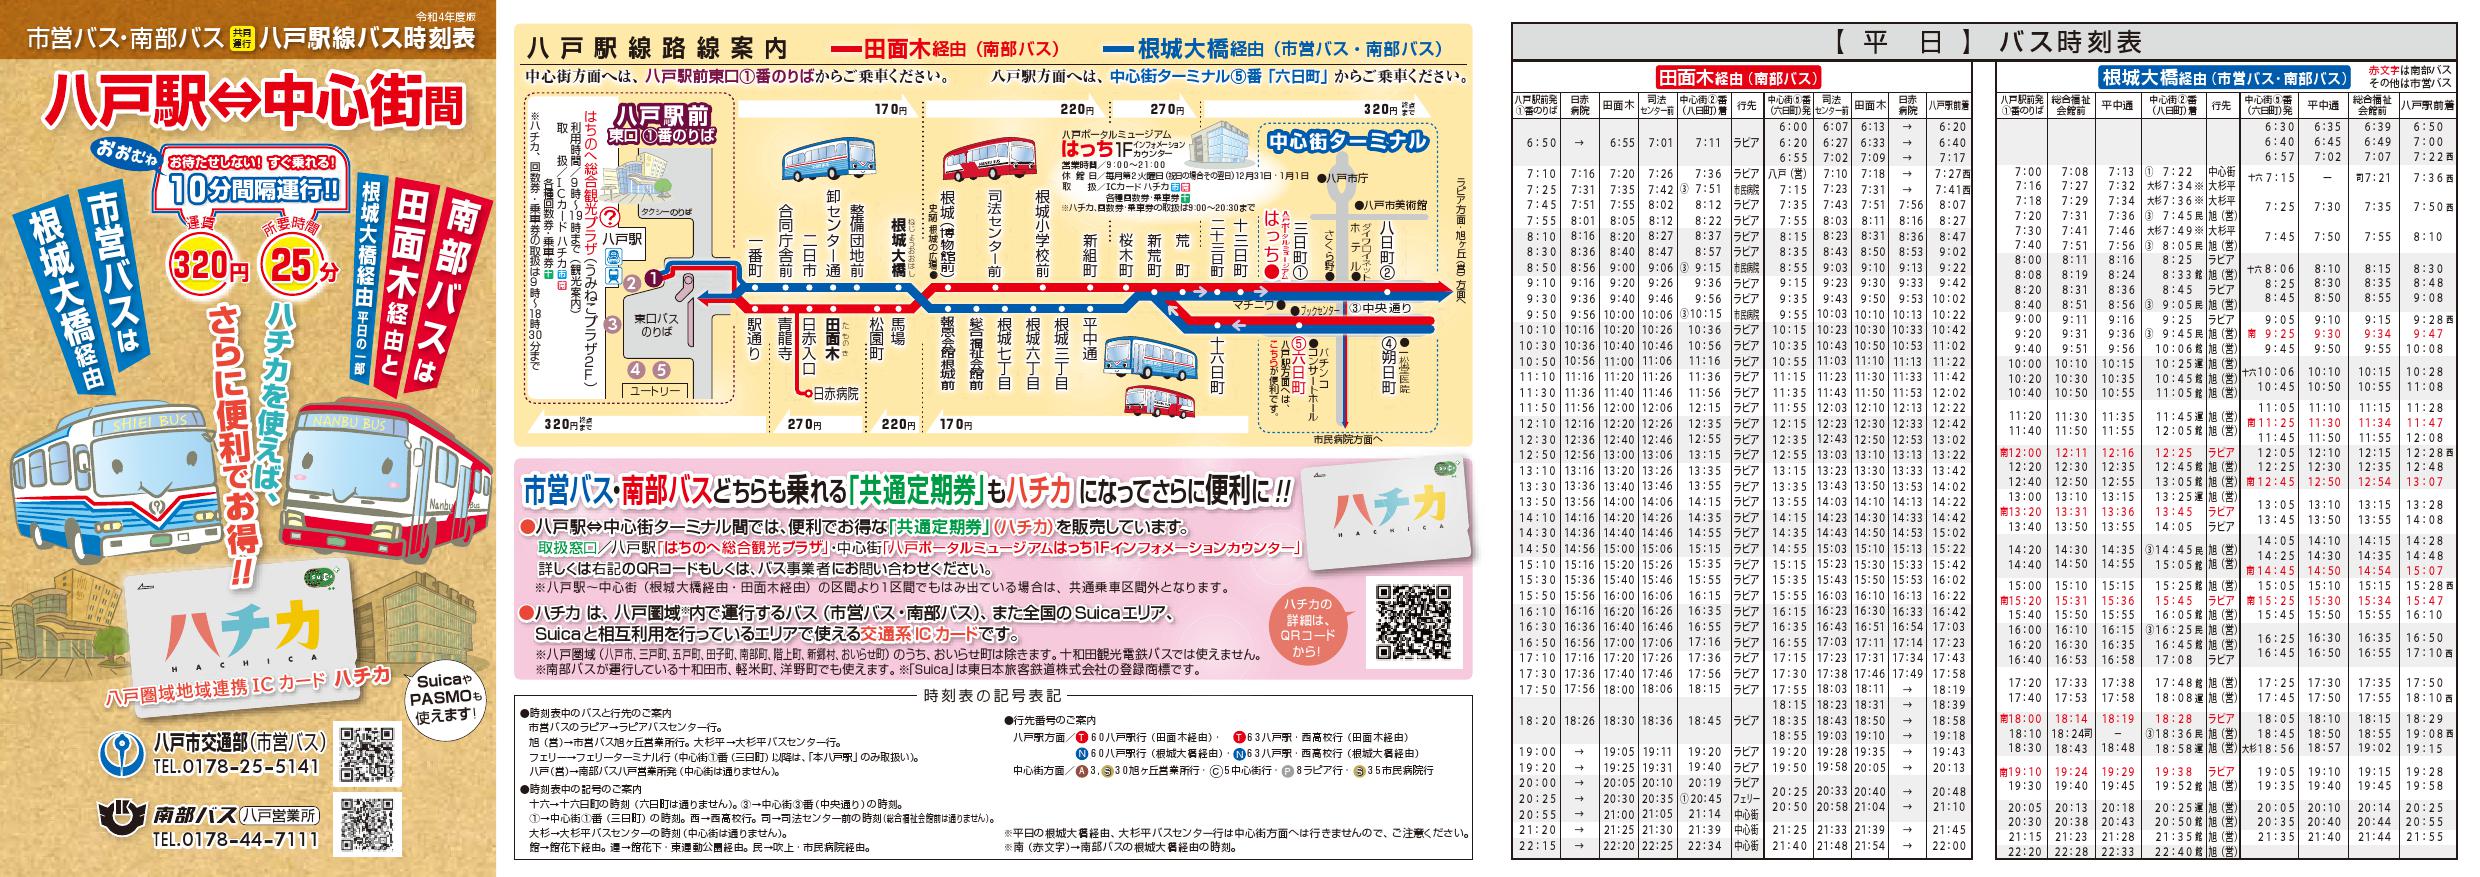 八戸駅線バス時刻表01